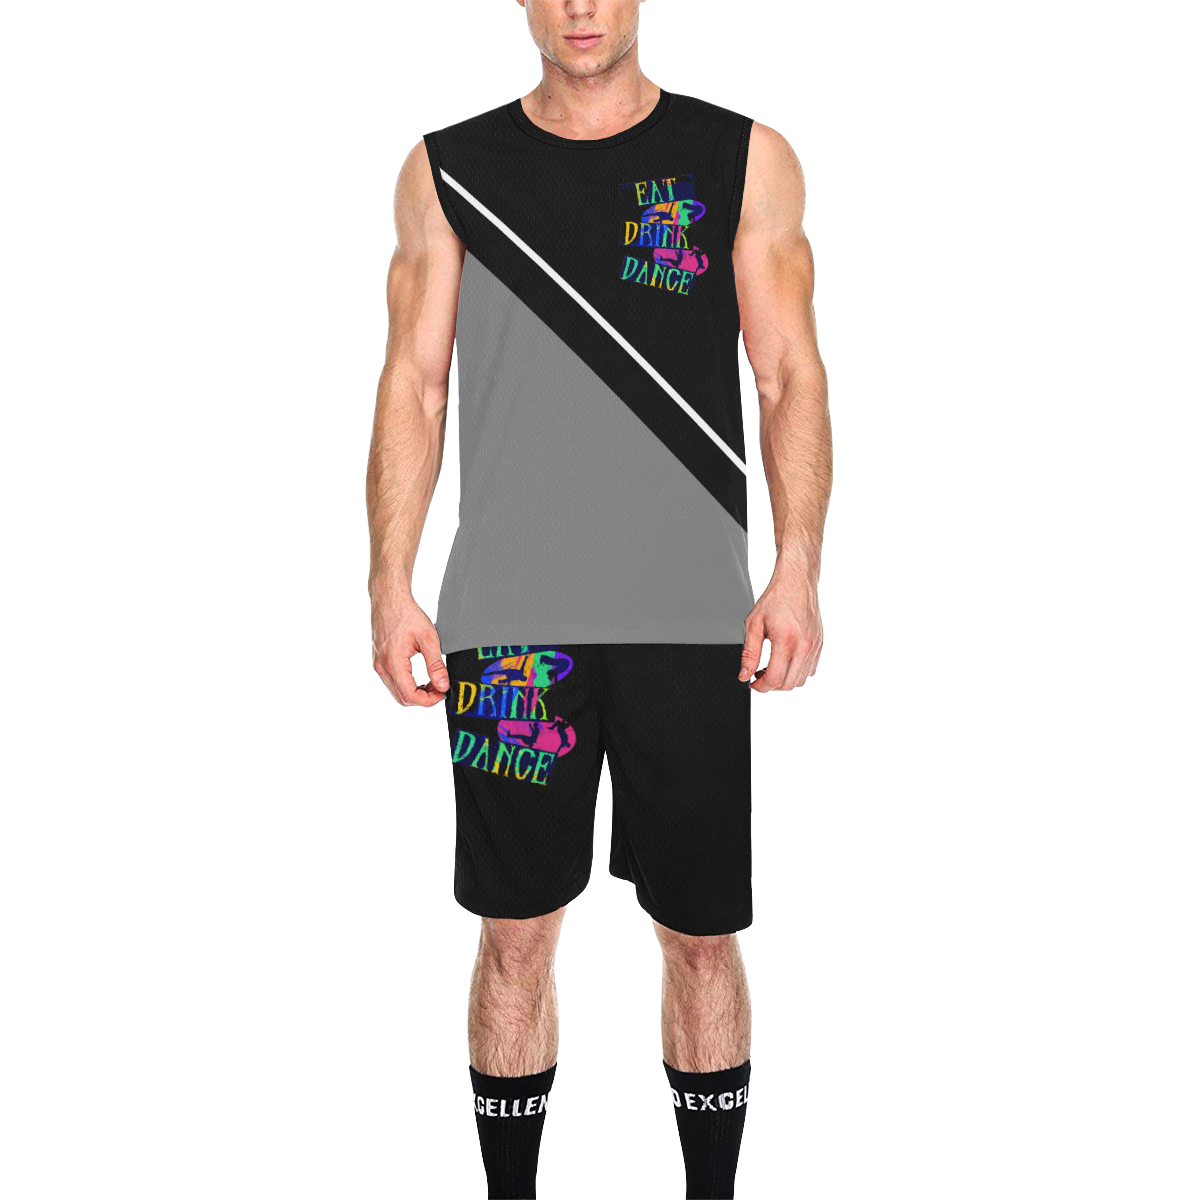 Break Dancing Colorful / Black / Silver All Over Print Basketball Uniform